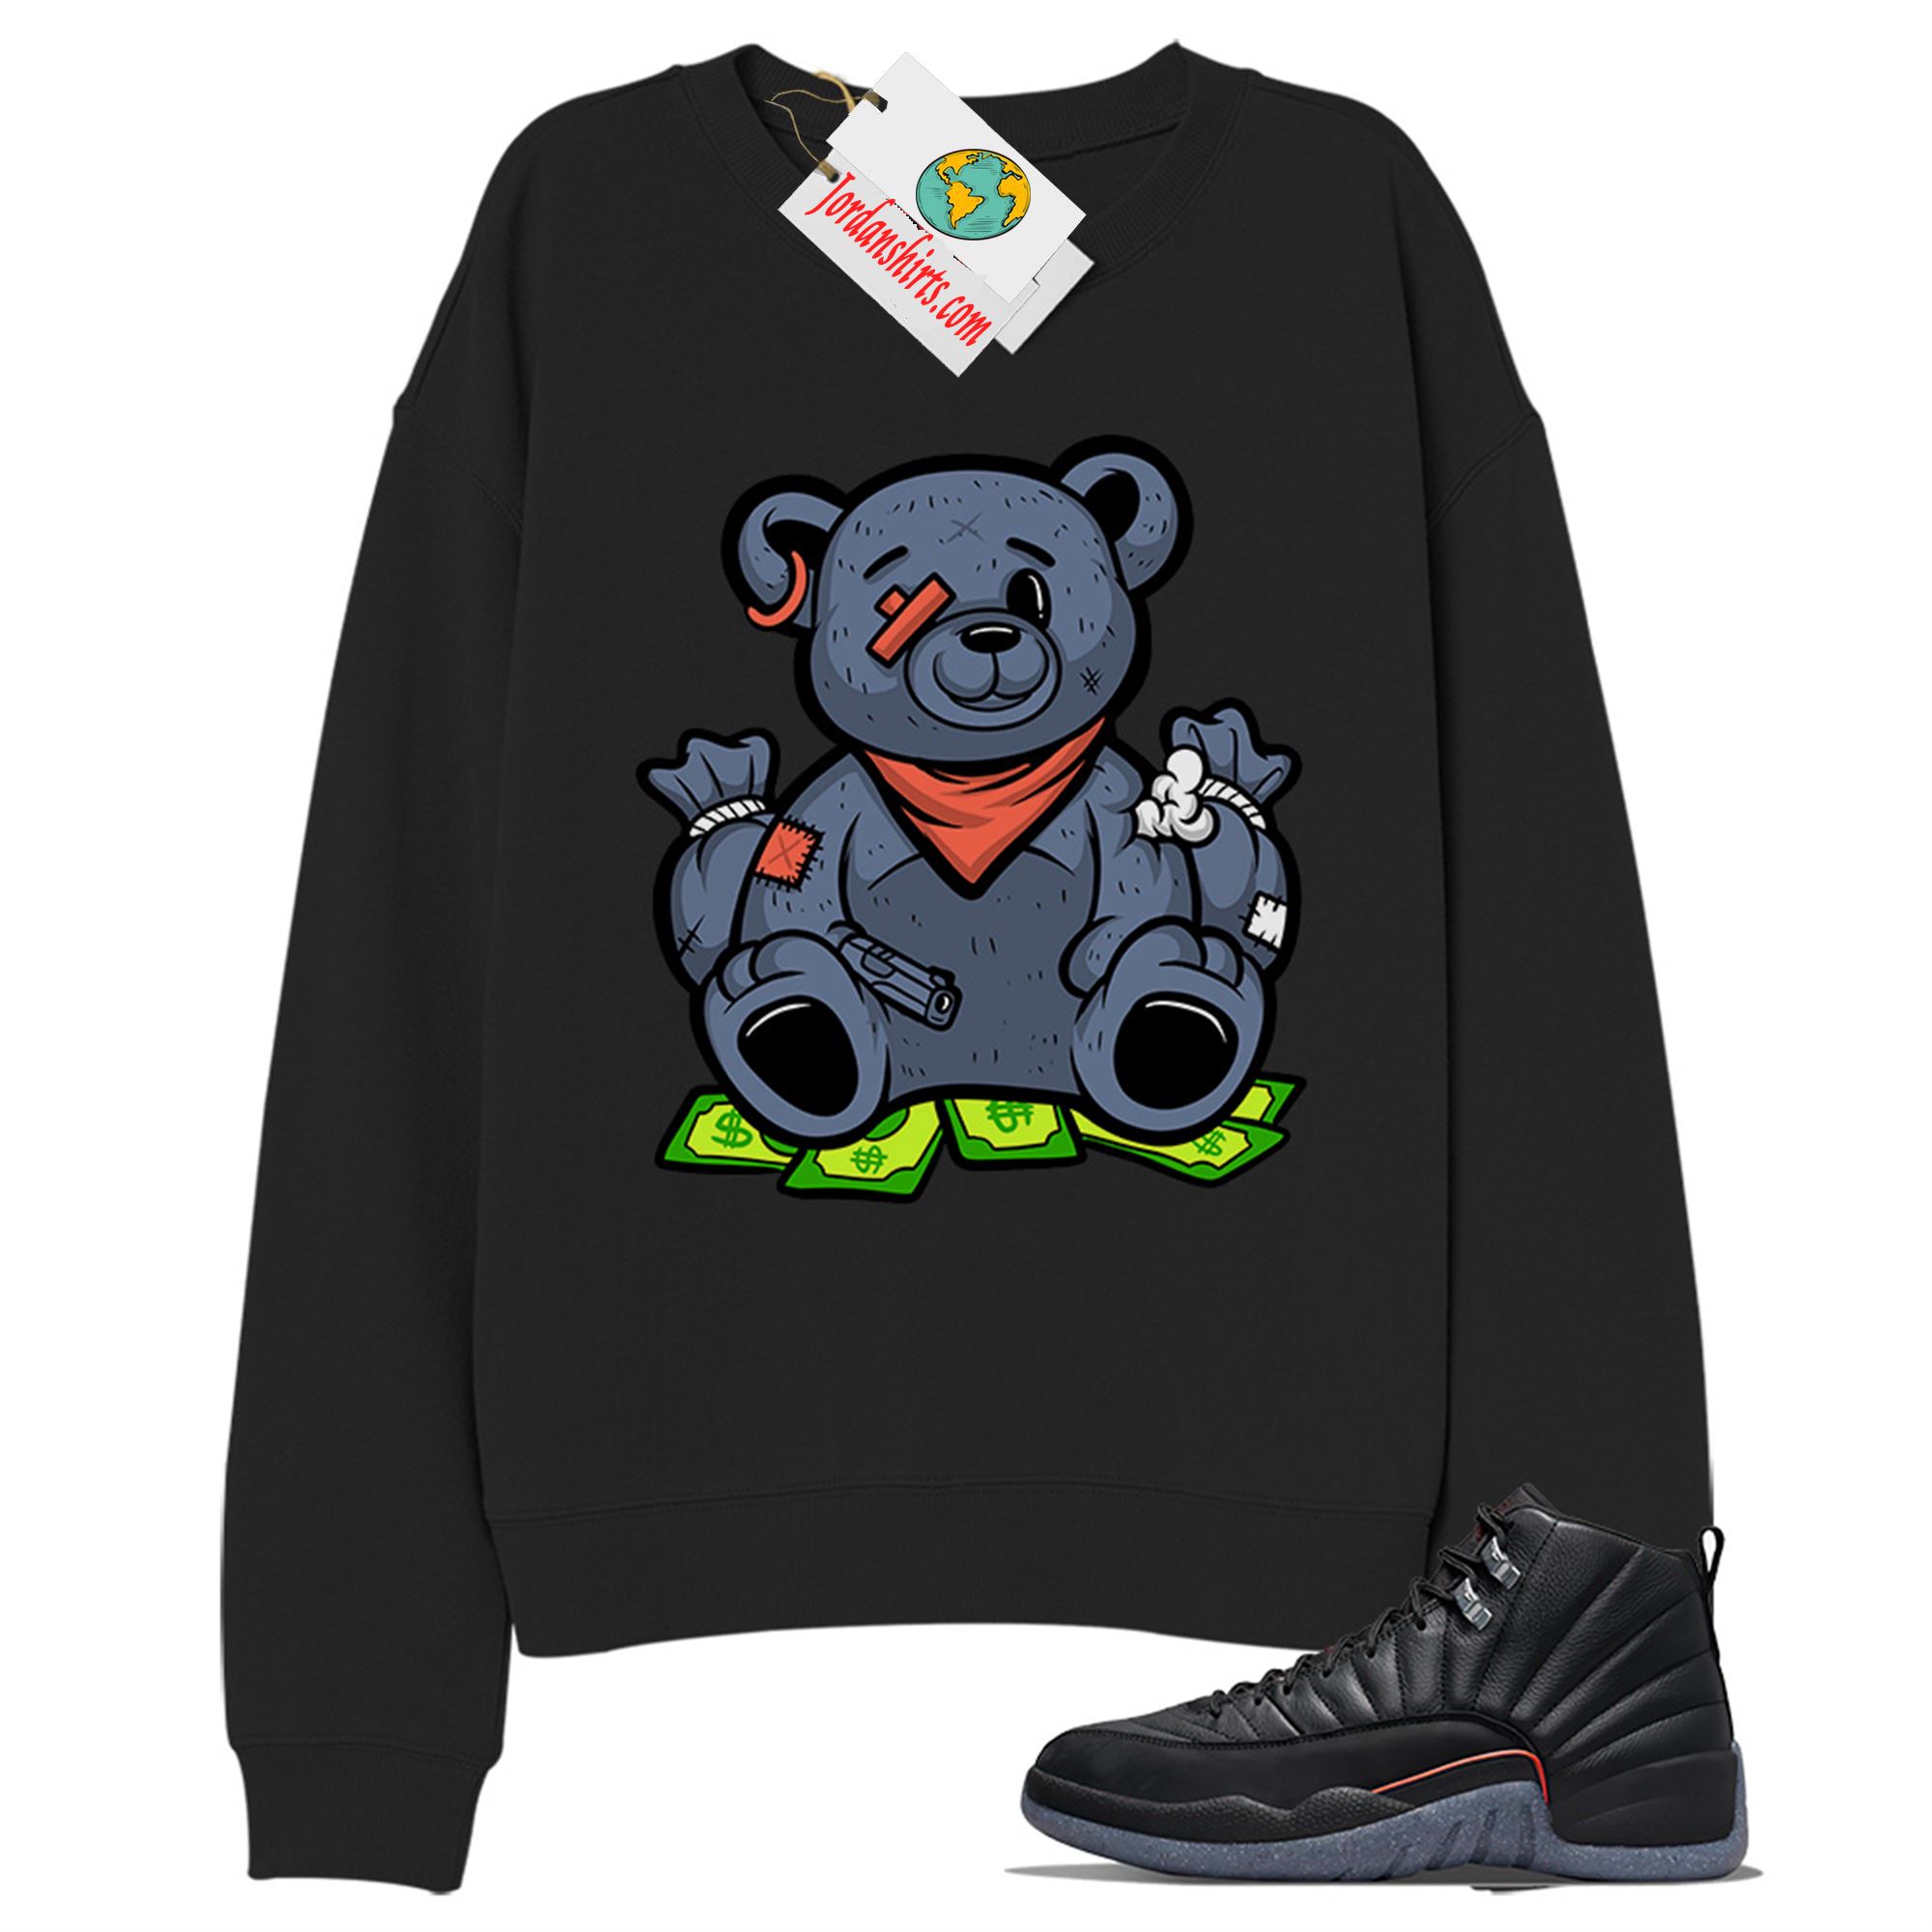 Jordan 12 Sweatshirt, Rich Teddy Bear Gangster Black Sweatshirt Air Jordan 12 Utility Grind 12s Full Size Up To 5xl